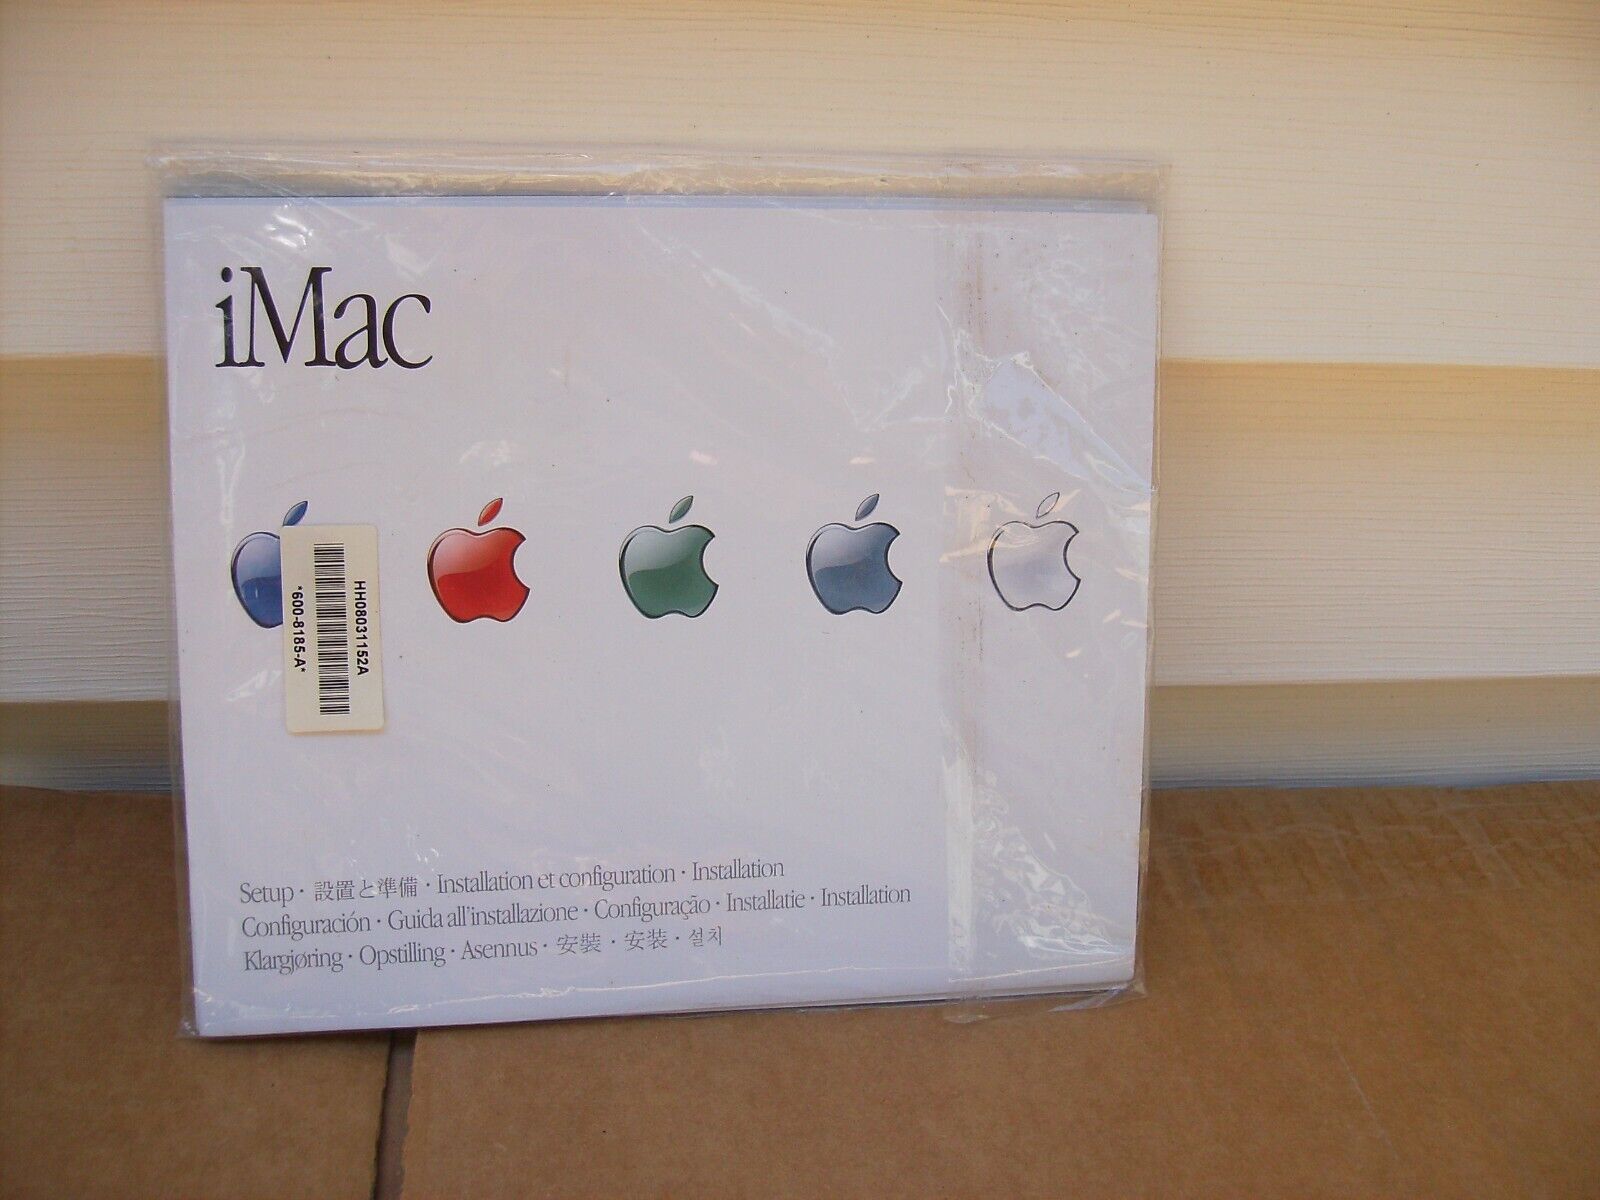 VINTAGE APPLE iMac G3 SETUP GUIDE - NIB